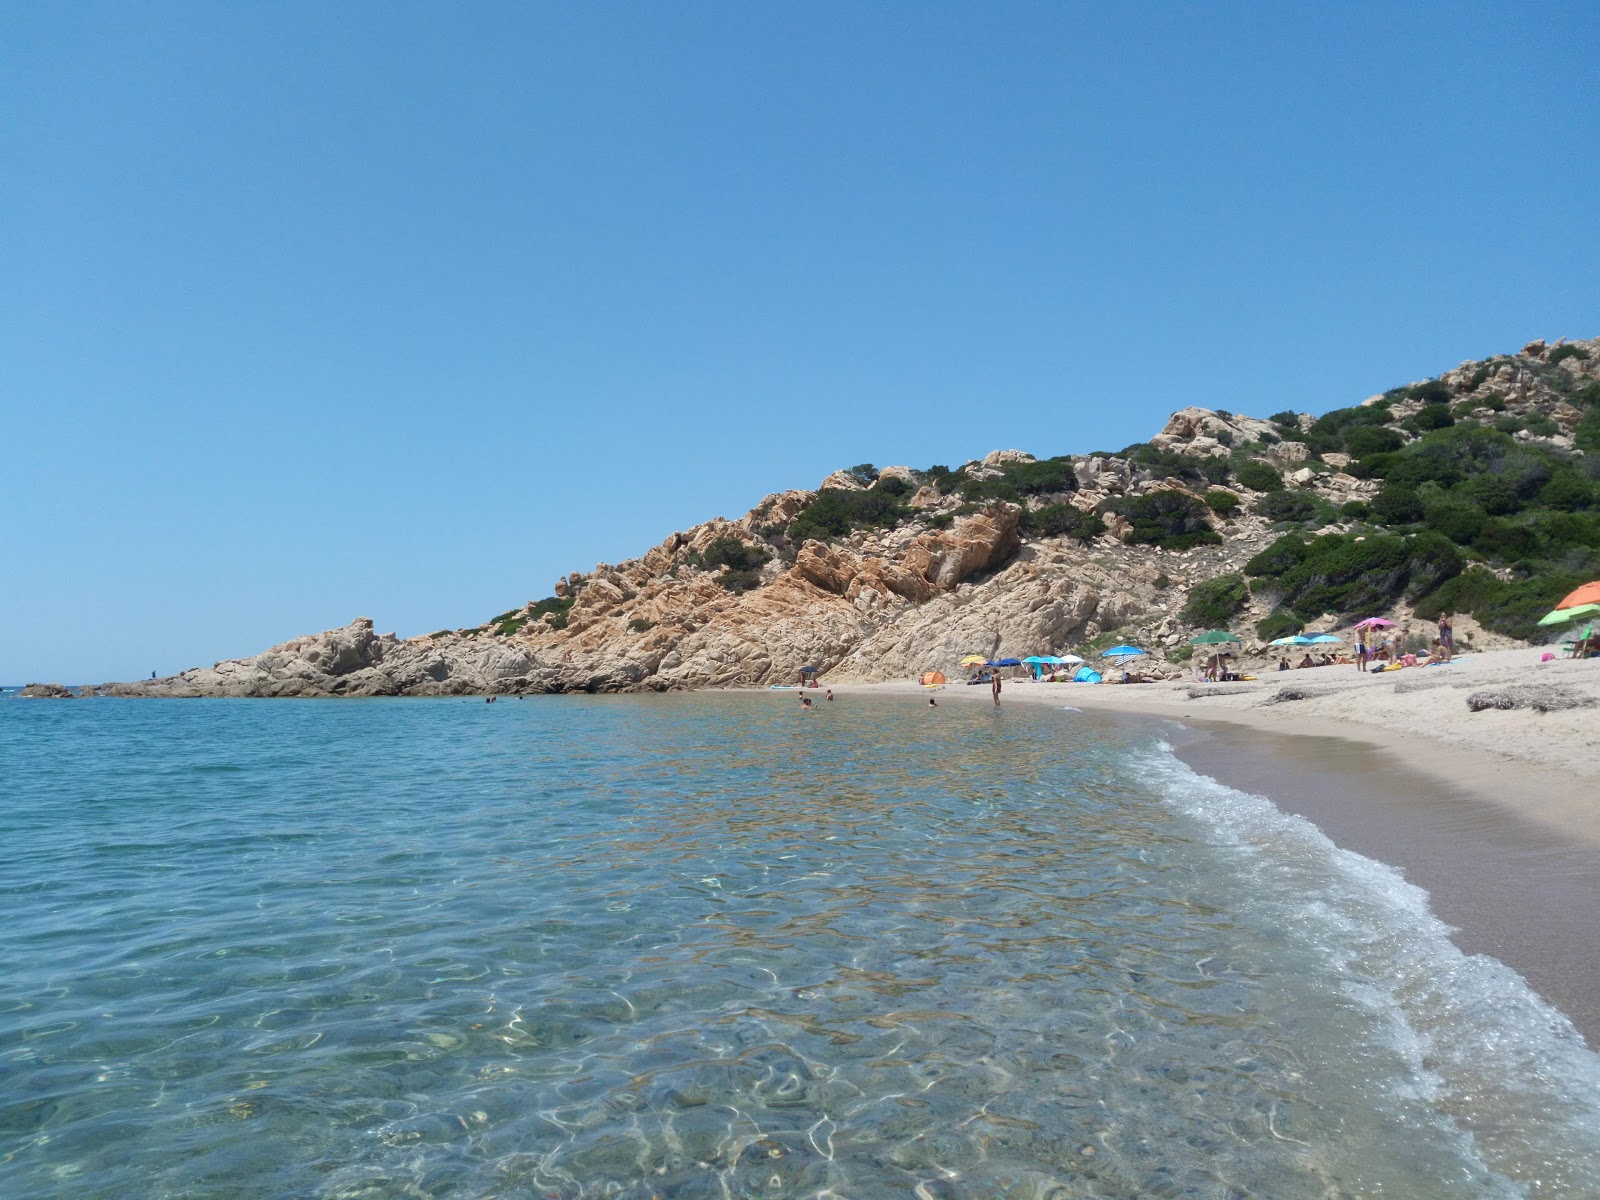 Photo of Spiaggia Monti Russu and its beautiful scenery